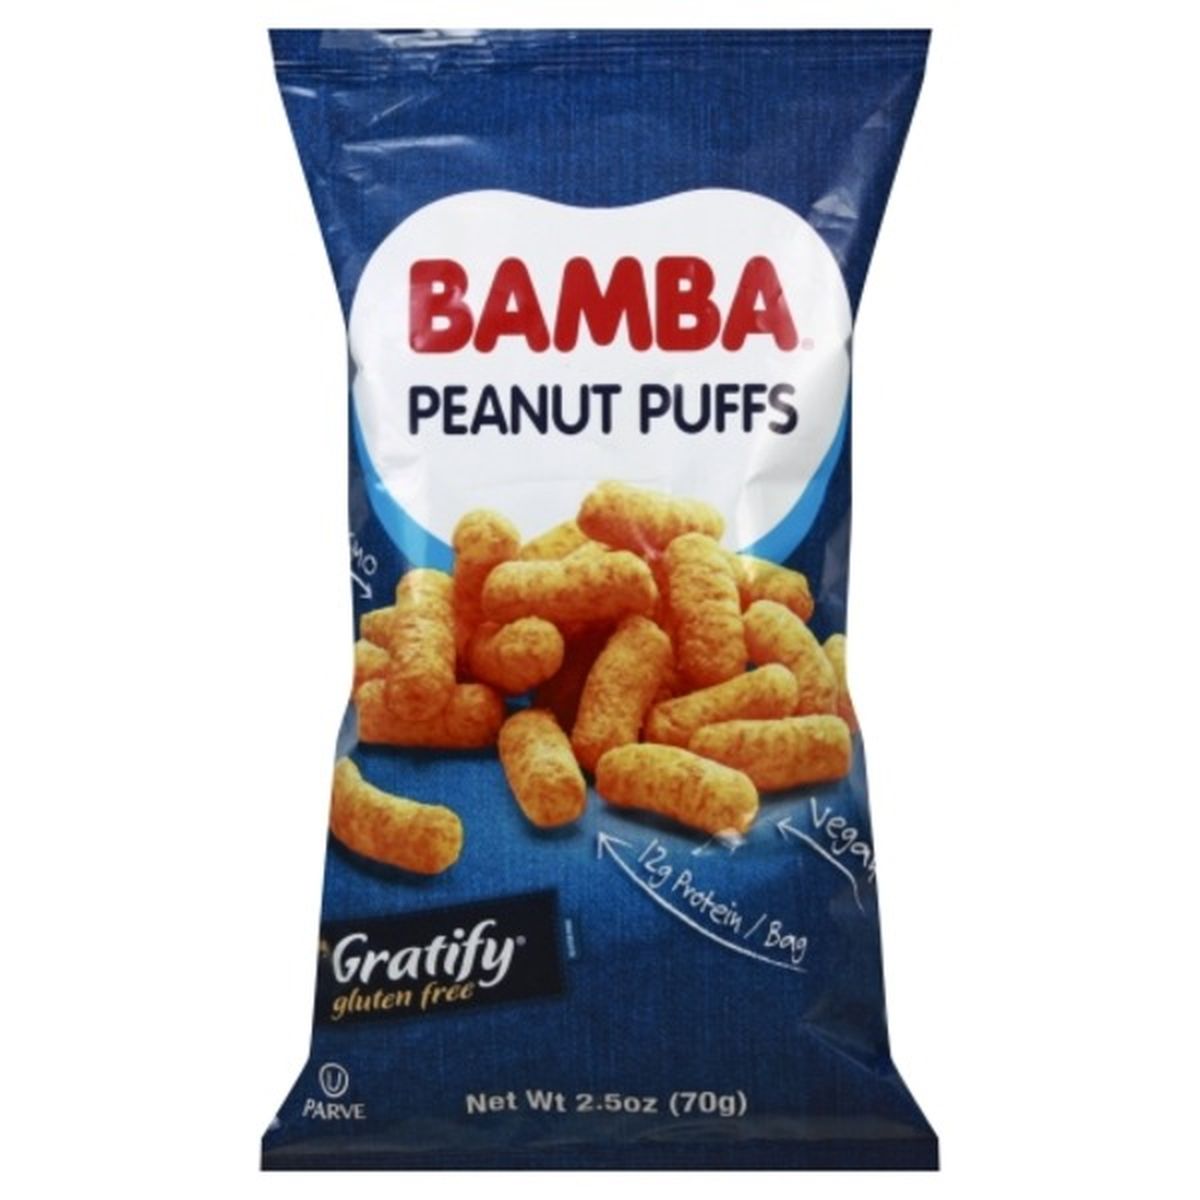 Calories in Bamba Peanut Puffs